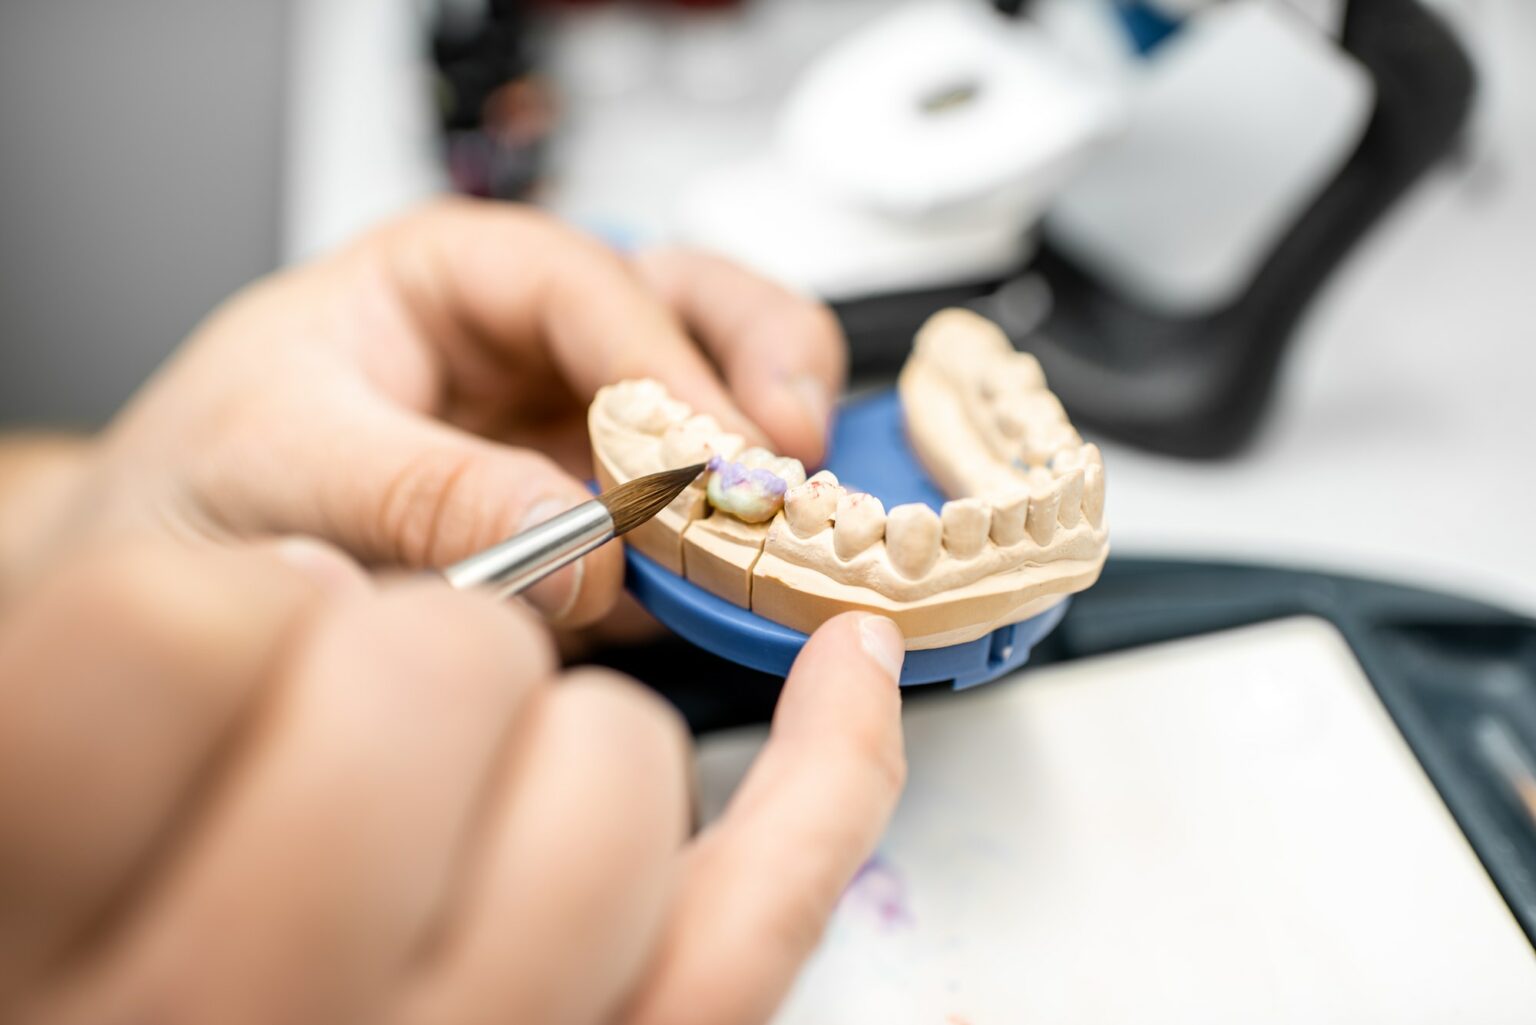 Dental technician coloring dental prosthesis